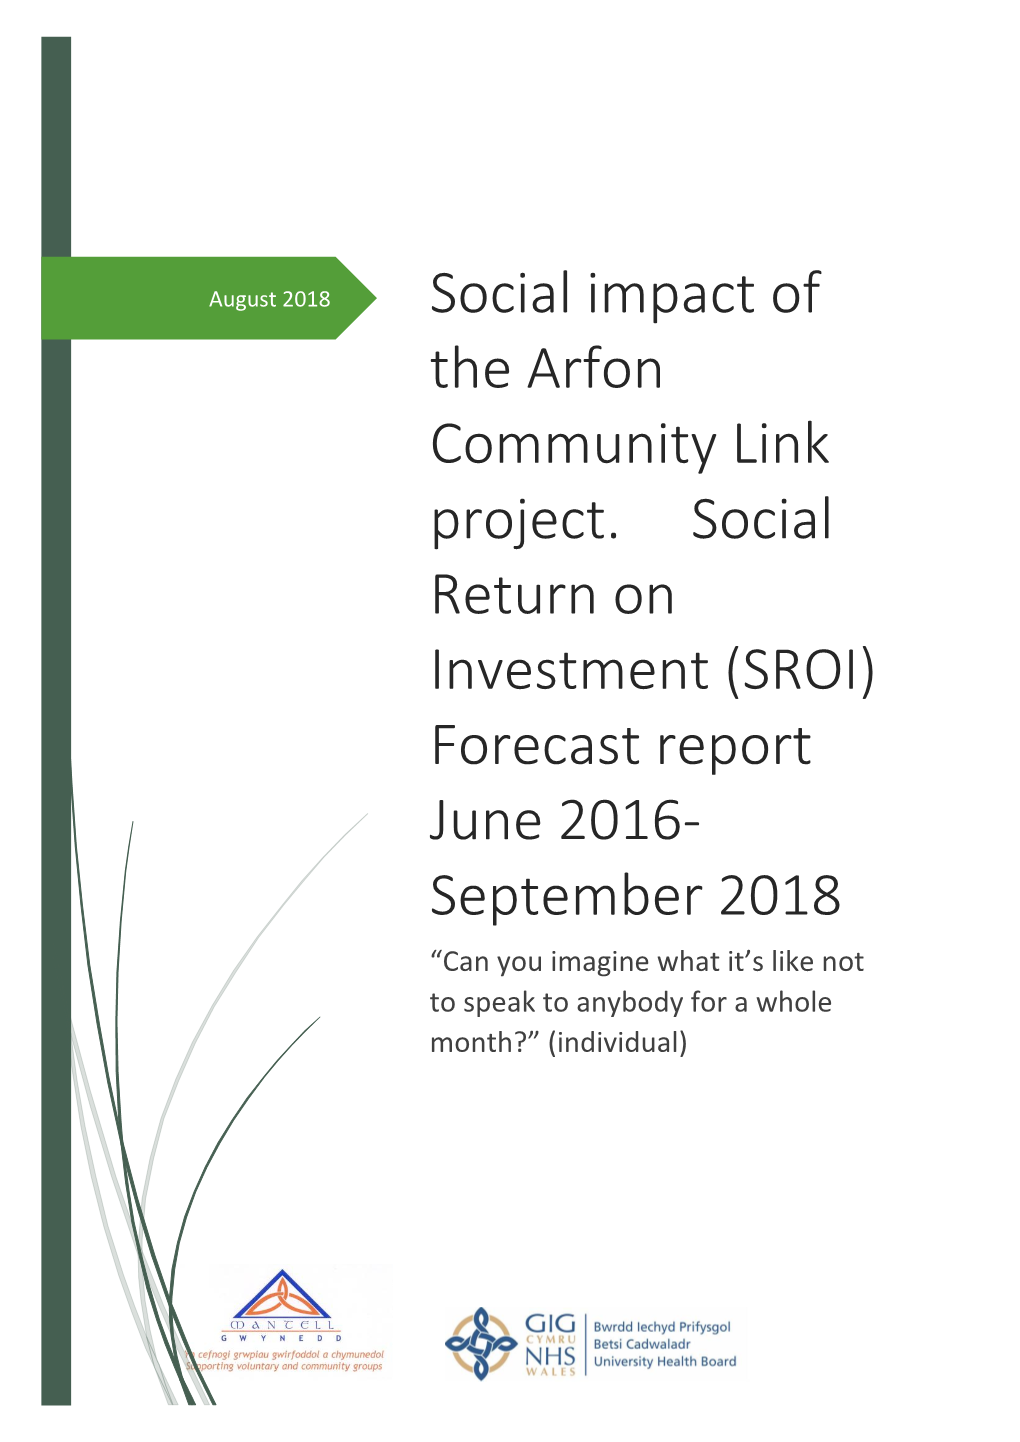 Social Impact of the Arfon Community Link Project